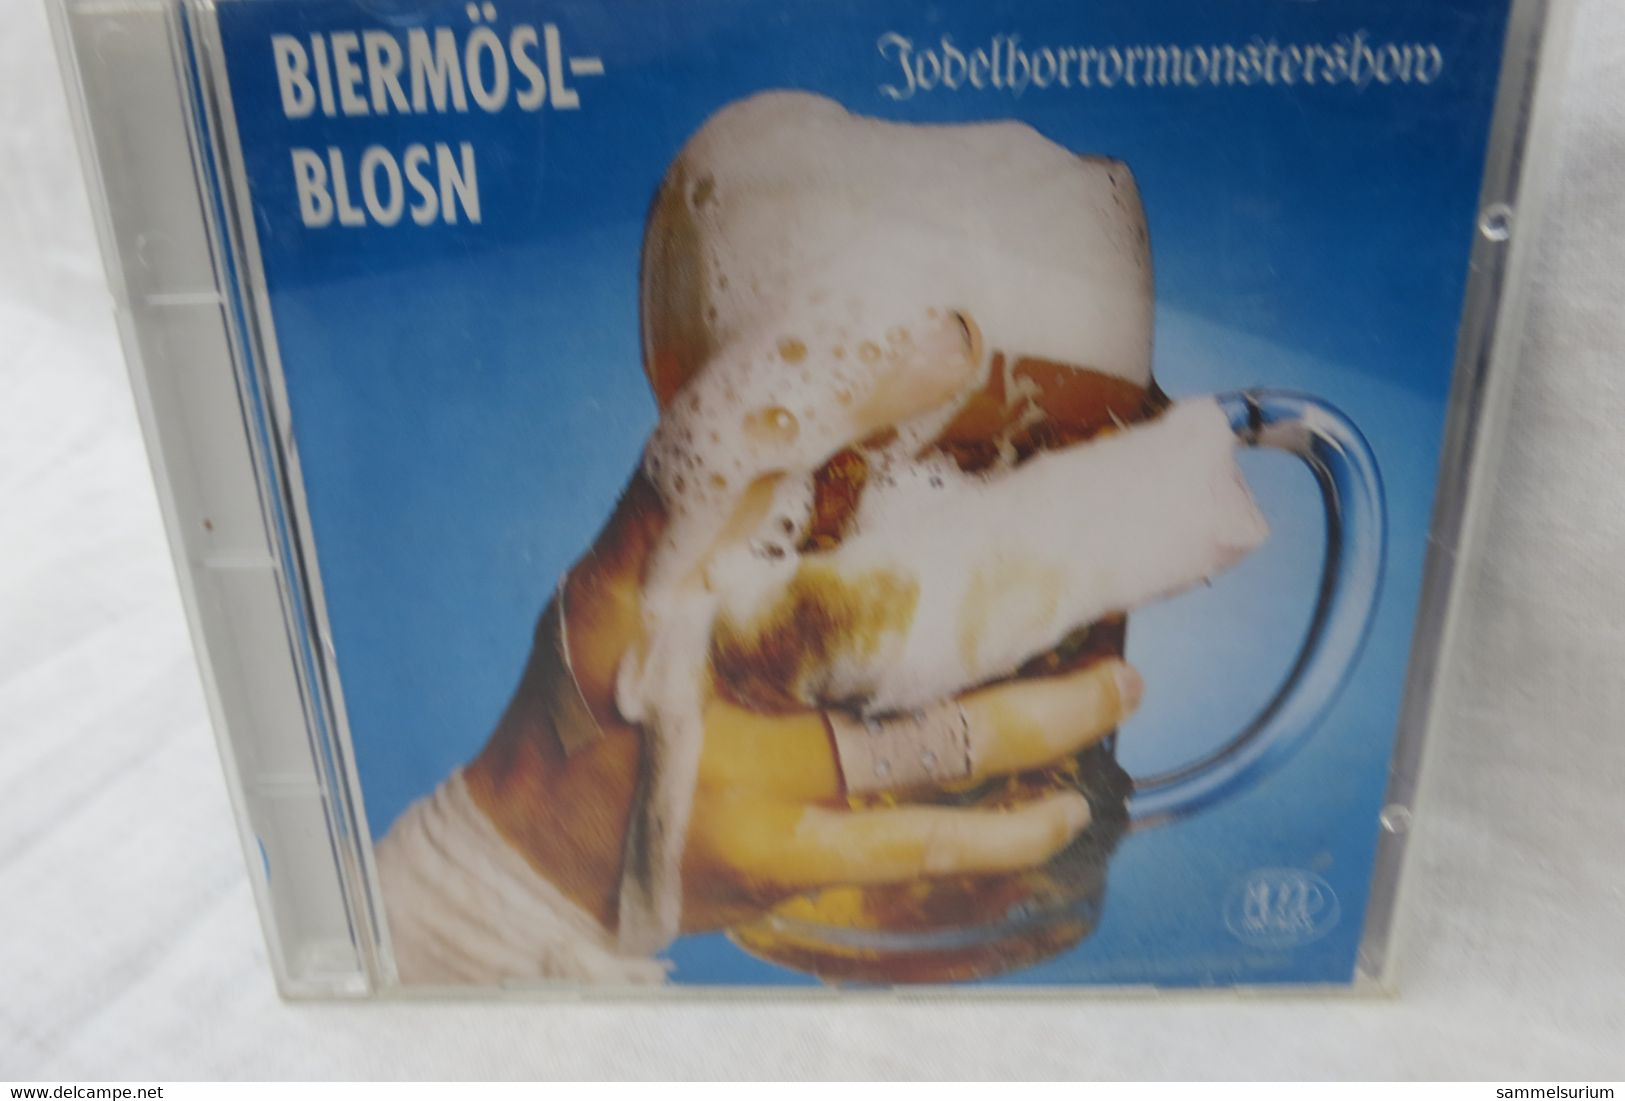 CD "Biermösl Blosn" Jodelhorrormonstershow - Cómica